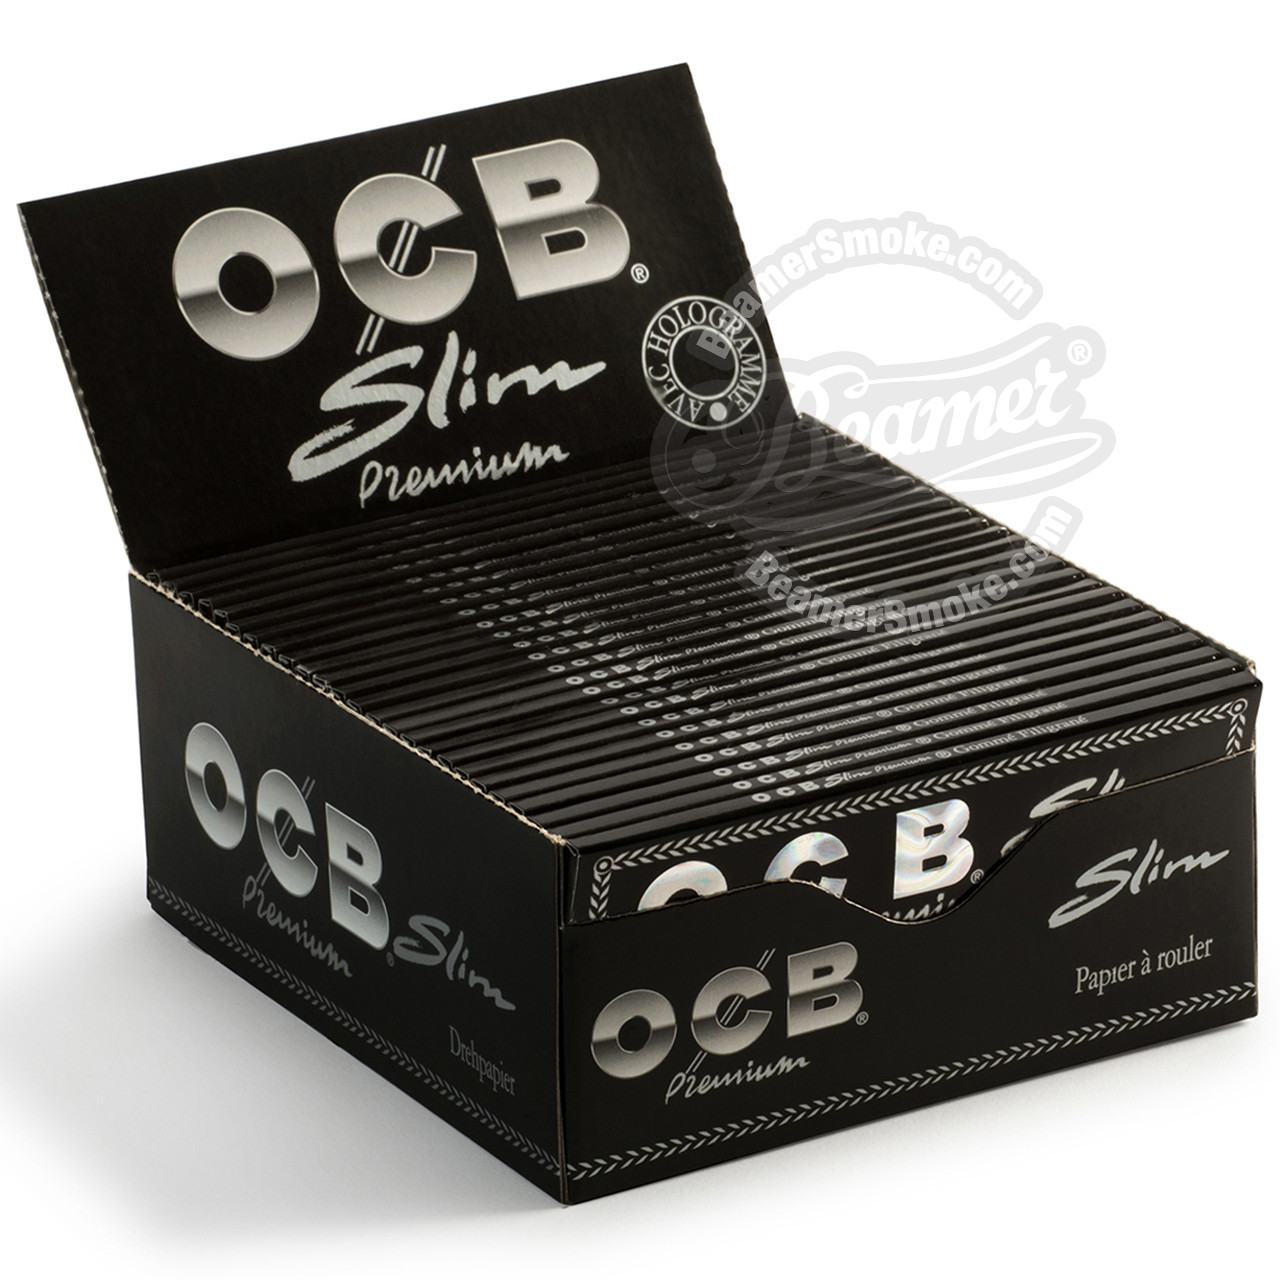 OCB Premium King Slim Rolling Papers – Sunshine Daydream